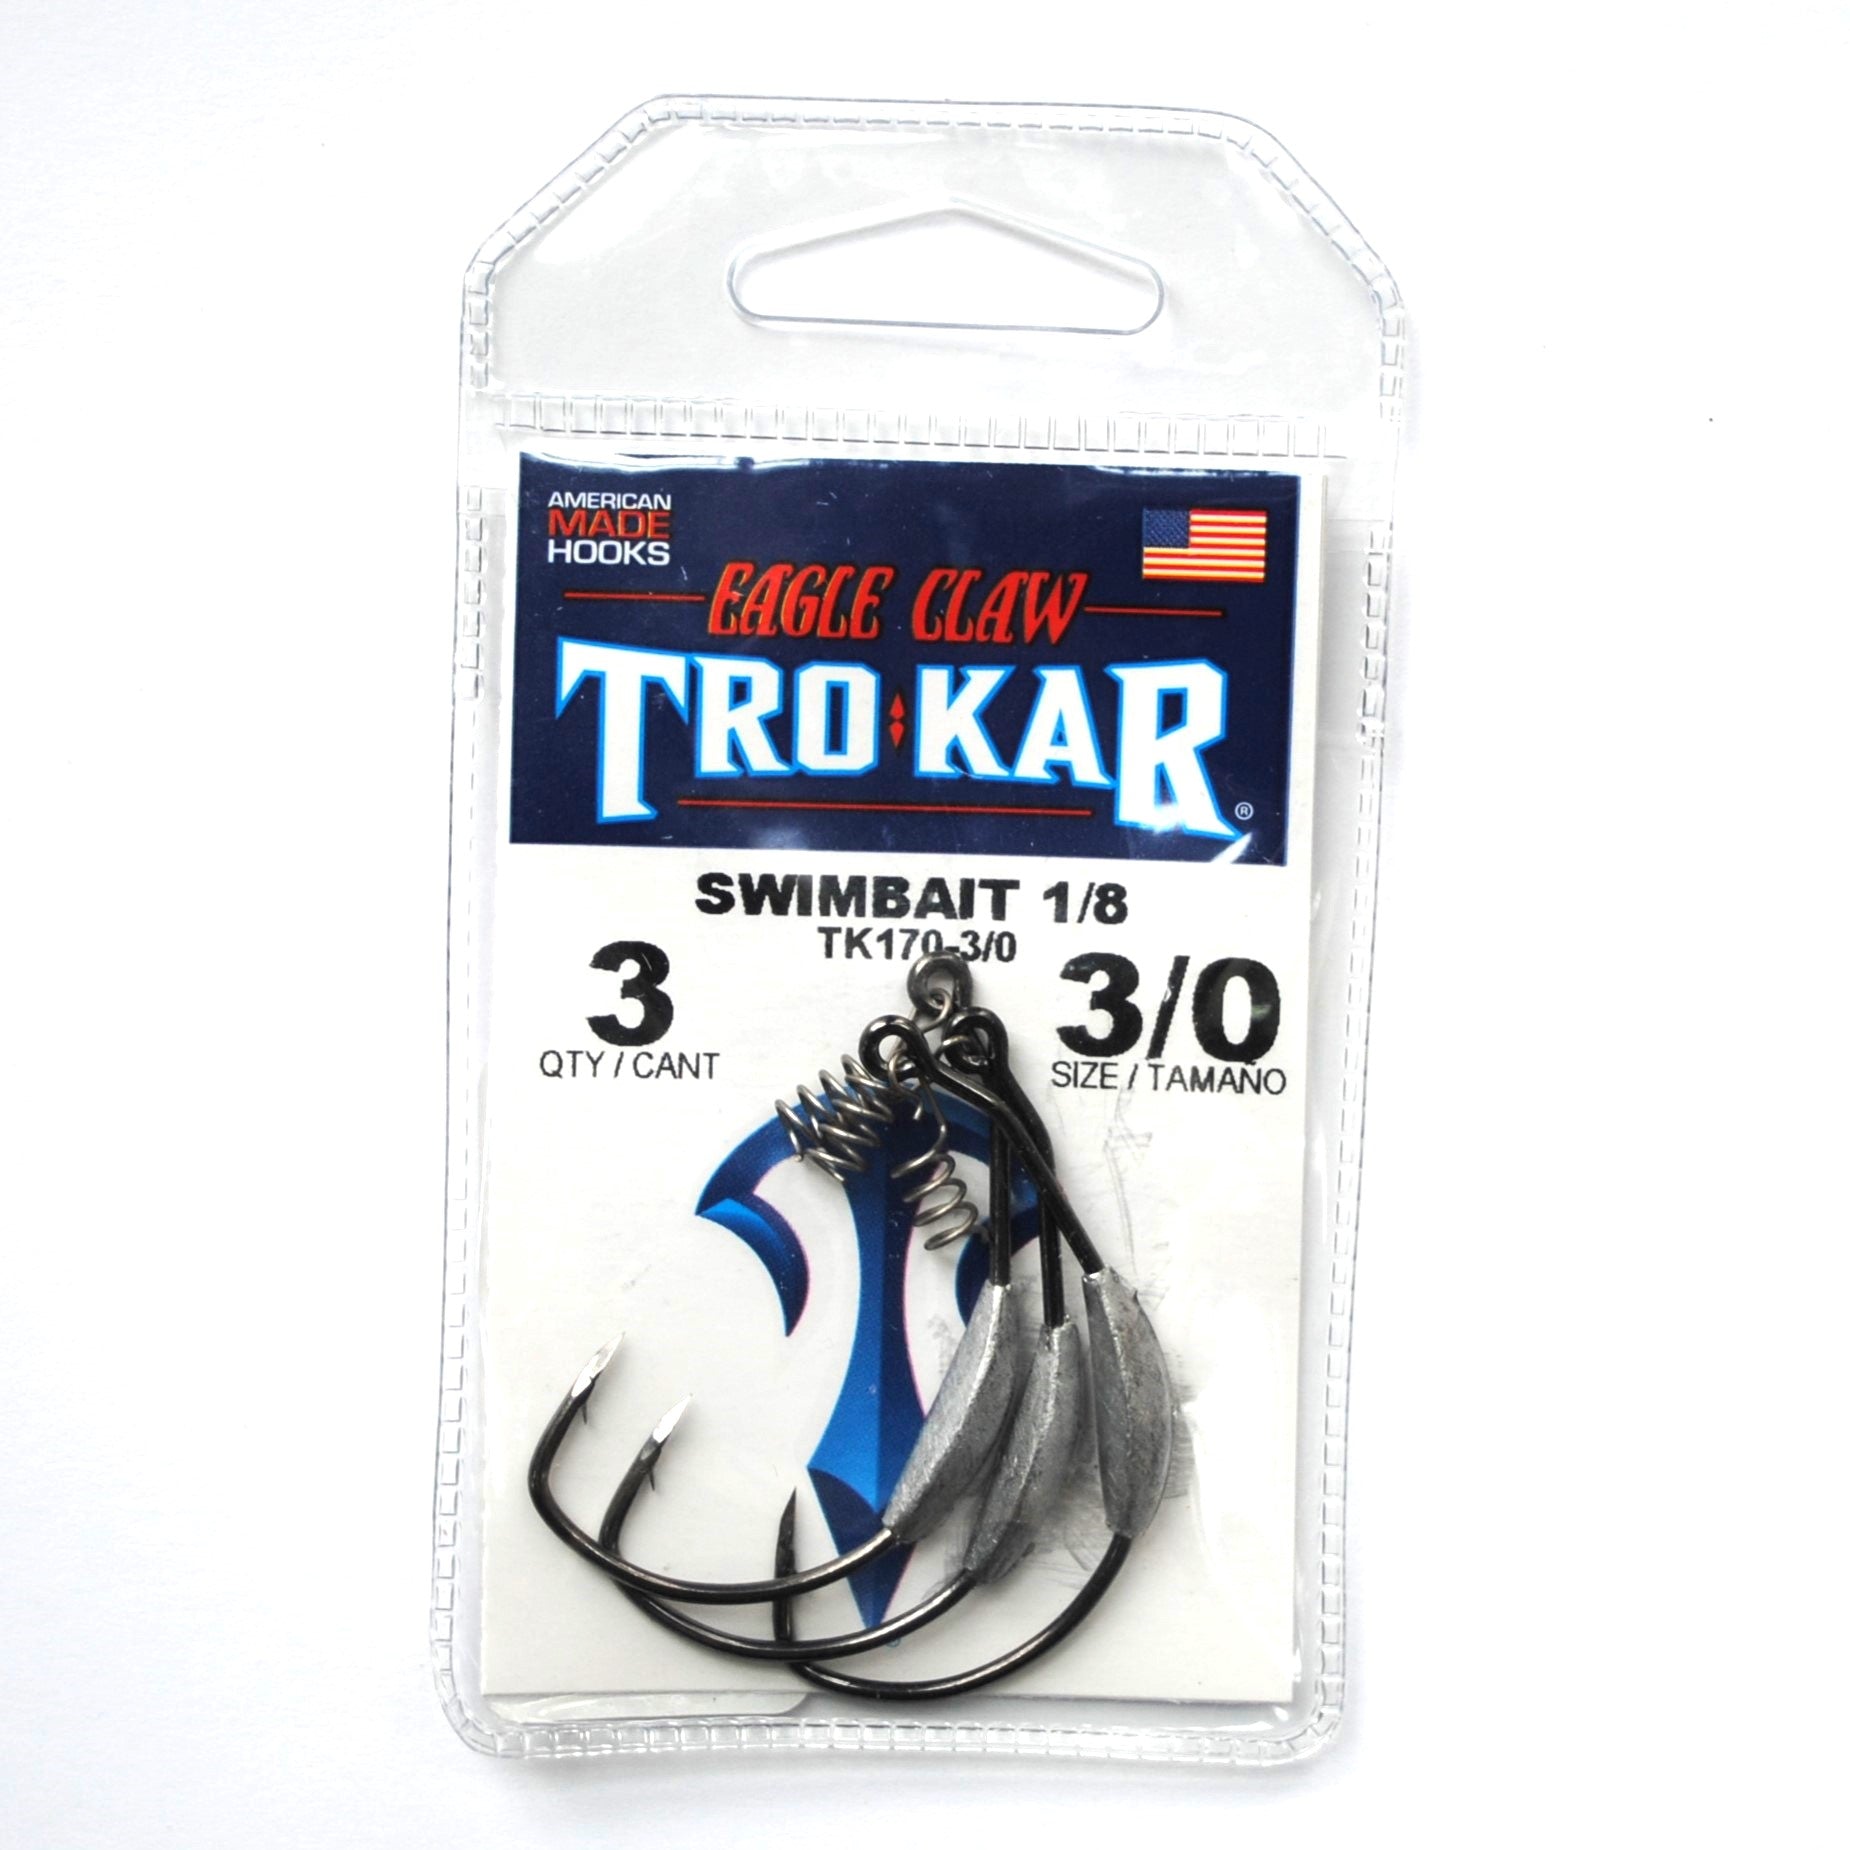 Eagle Claw Trokar Magnum Swimbait TK160 Hooks - 10/0 (2 Per Pack)